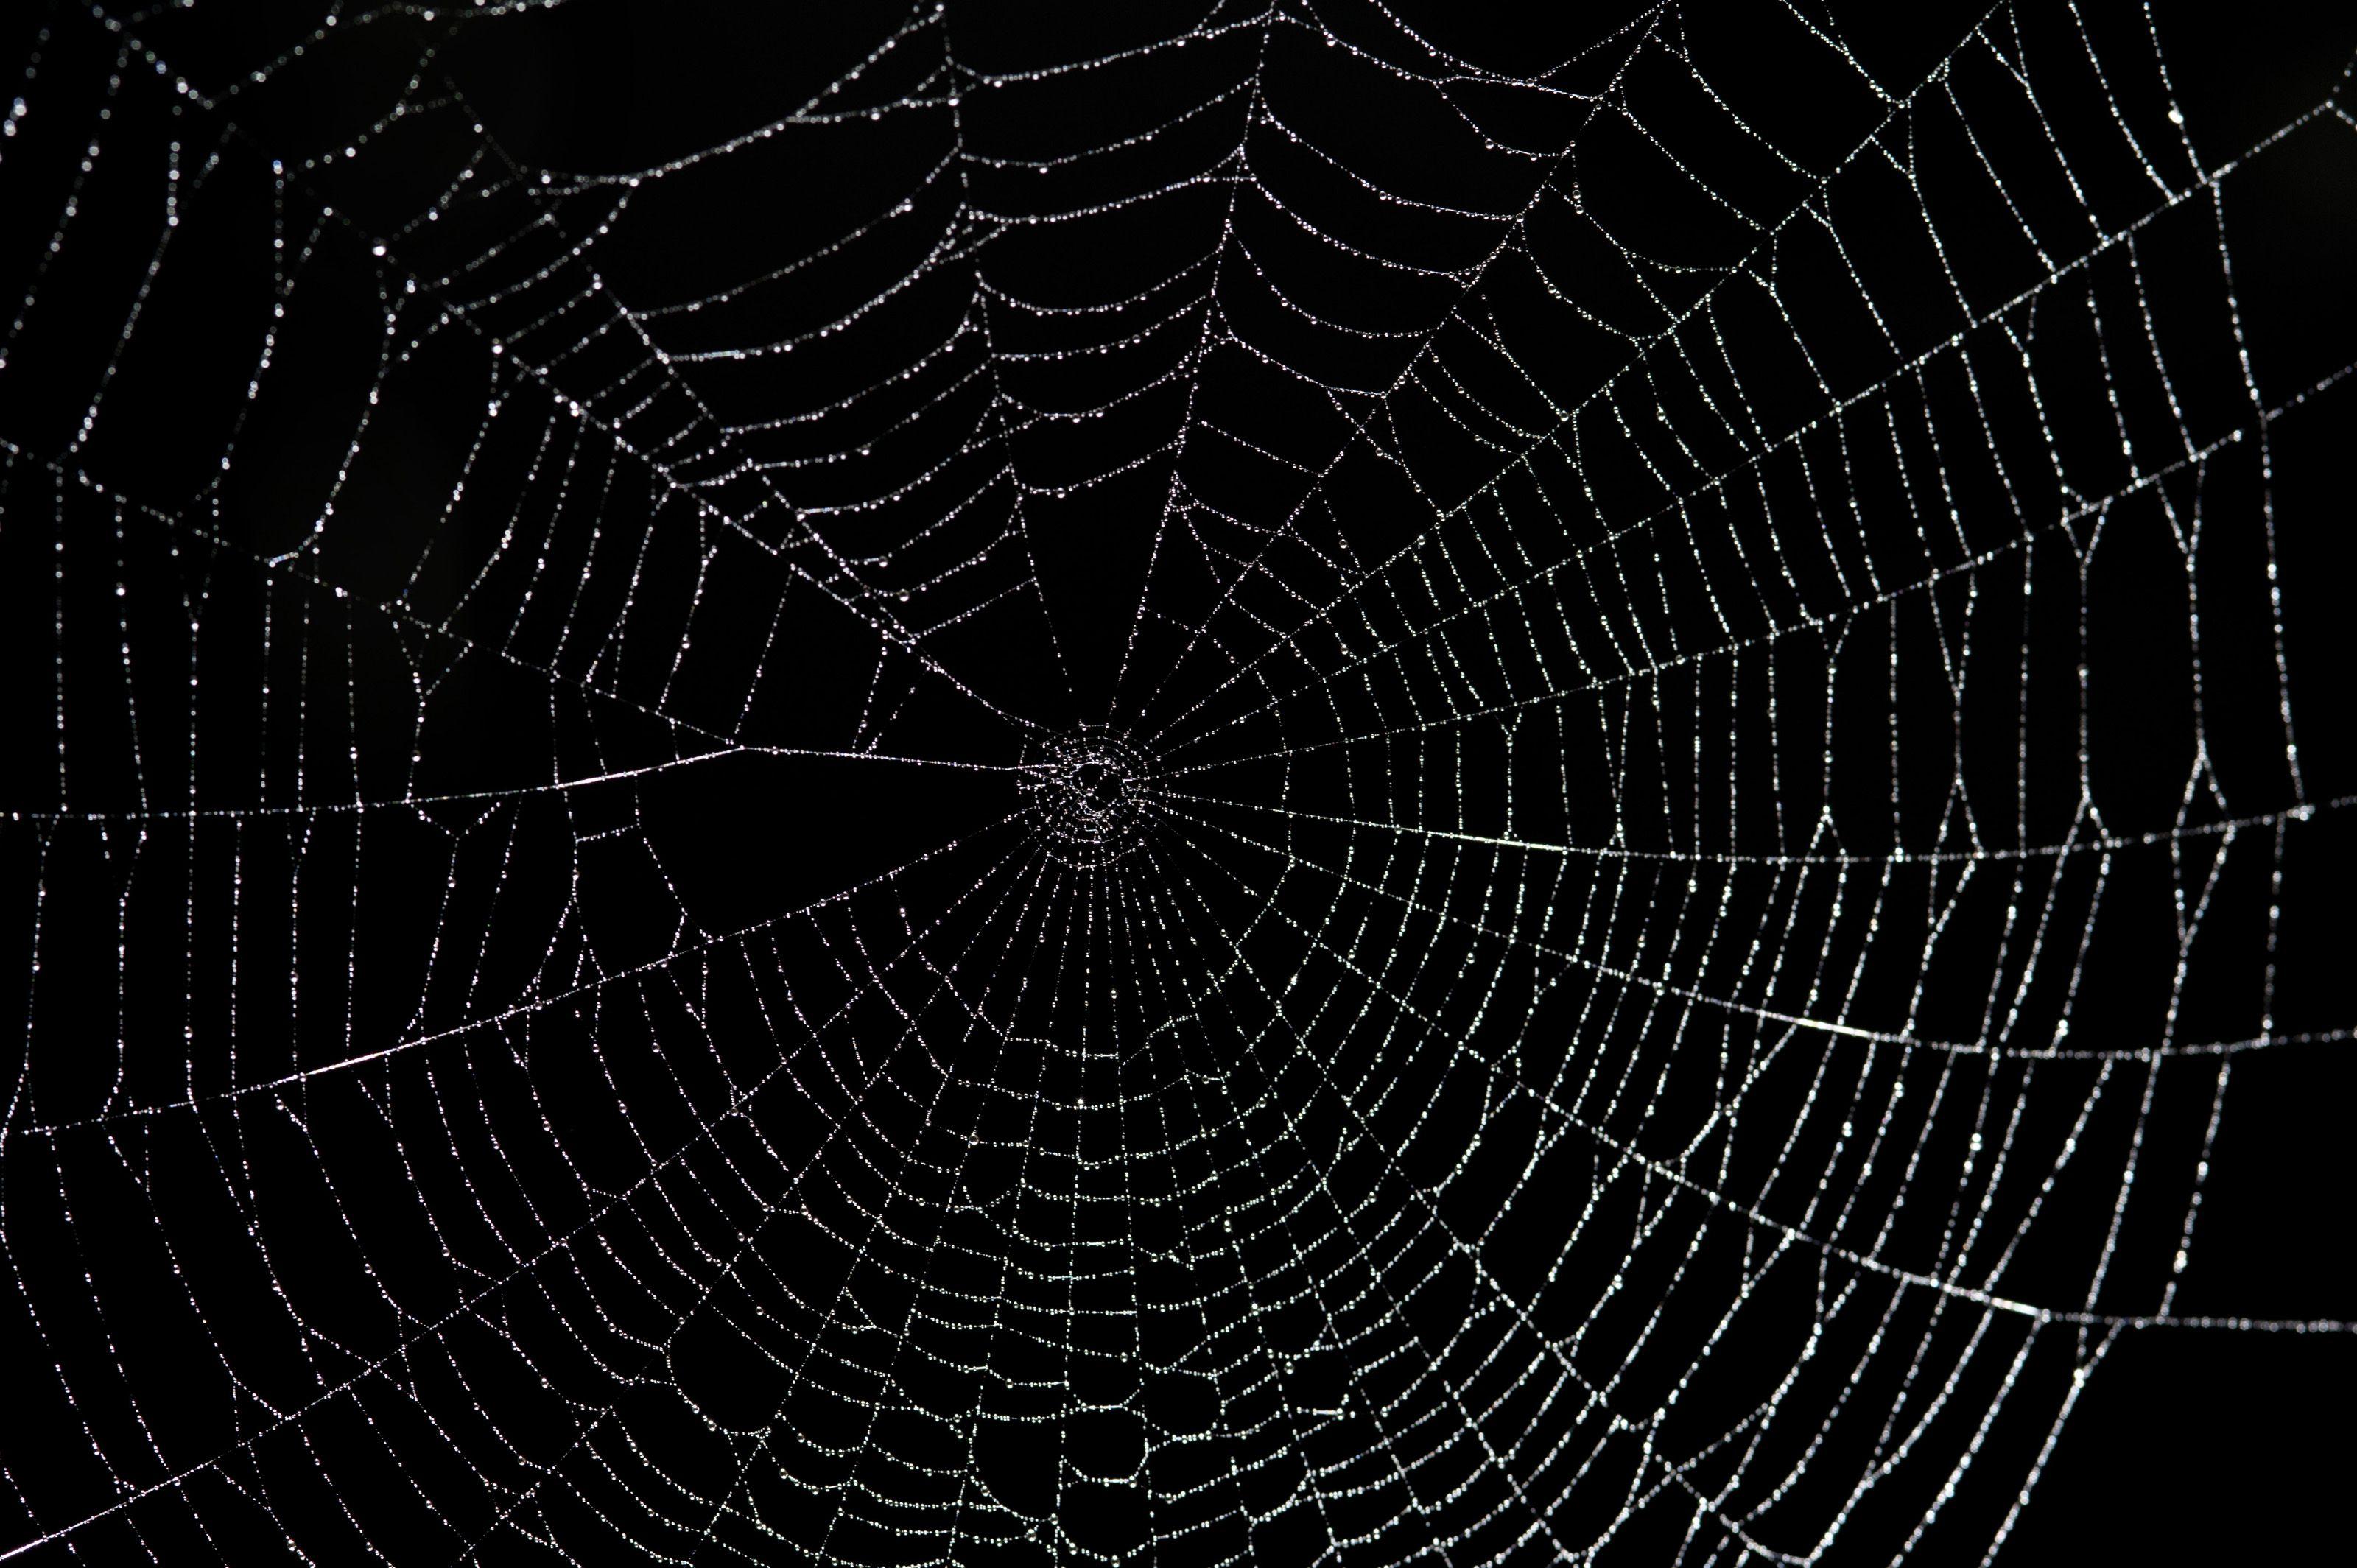 Photography Spider Web wallpaper (Desktop, Phone, Tablet)